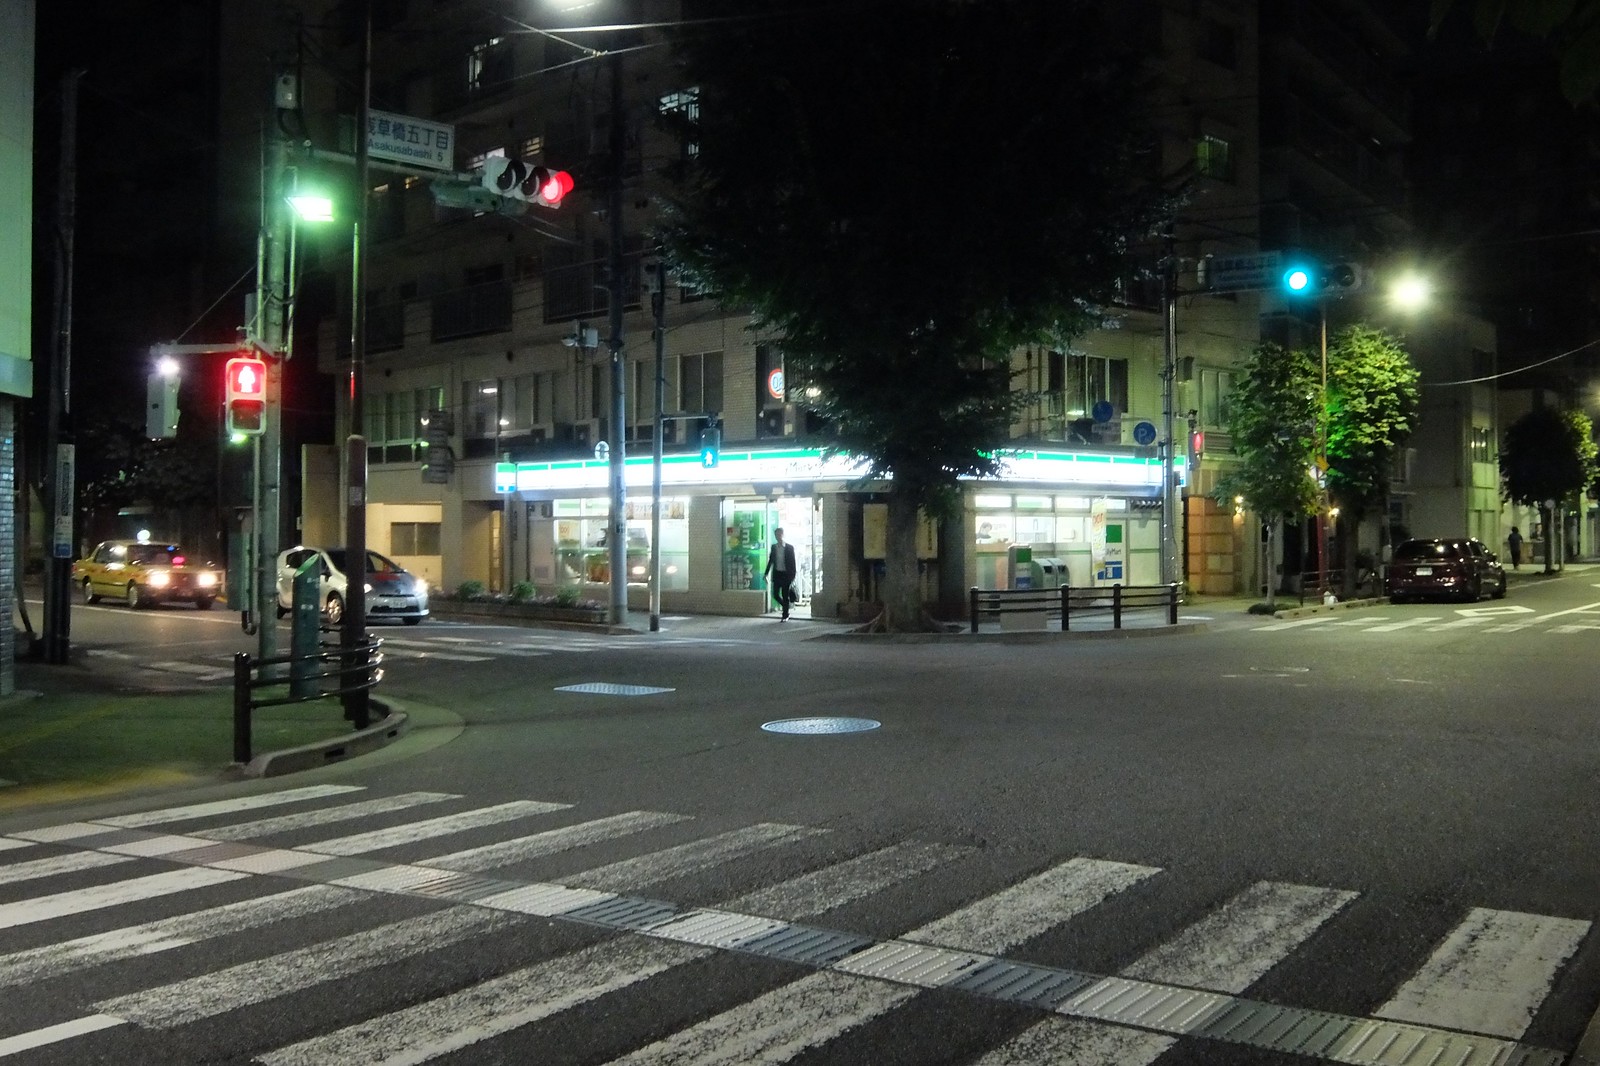 The Asakusabashi photo in Tokyo, Japan.